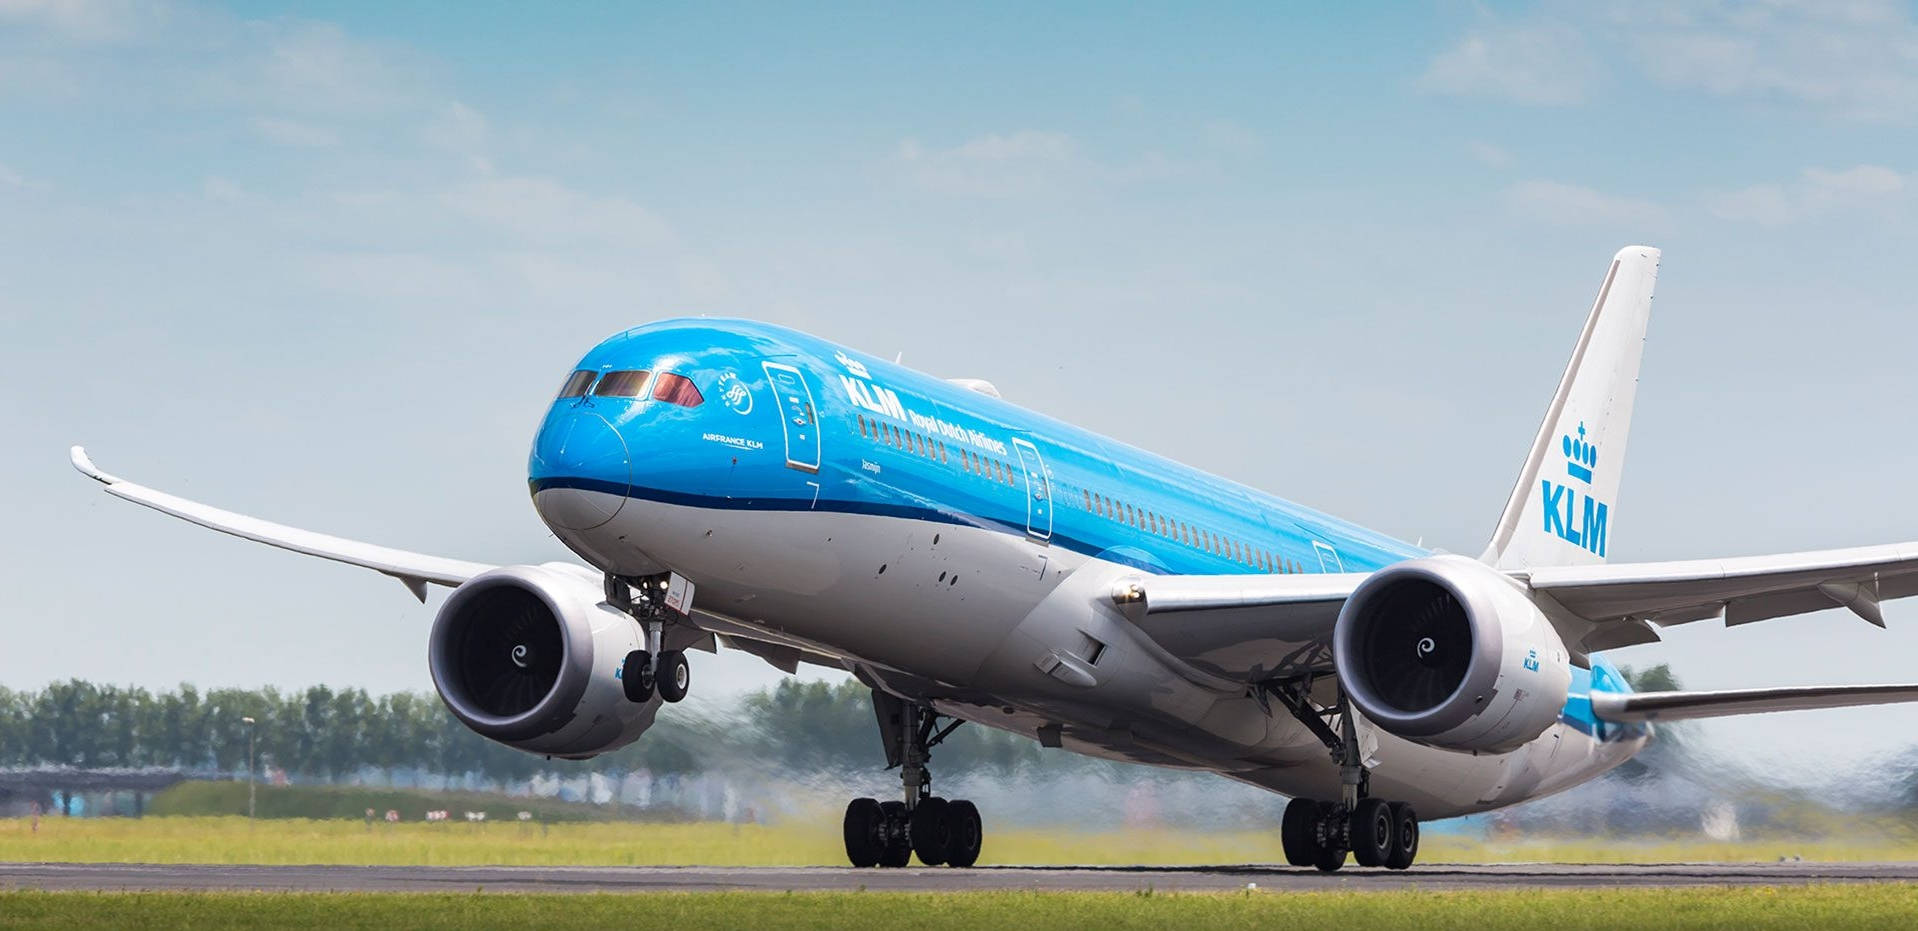 Superb Action Shot KLM Passenger Airplane Wallpaper